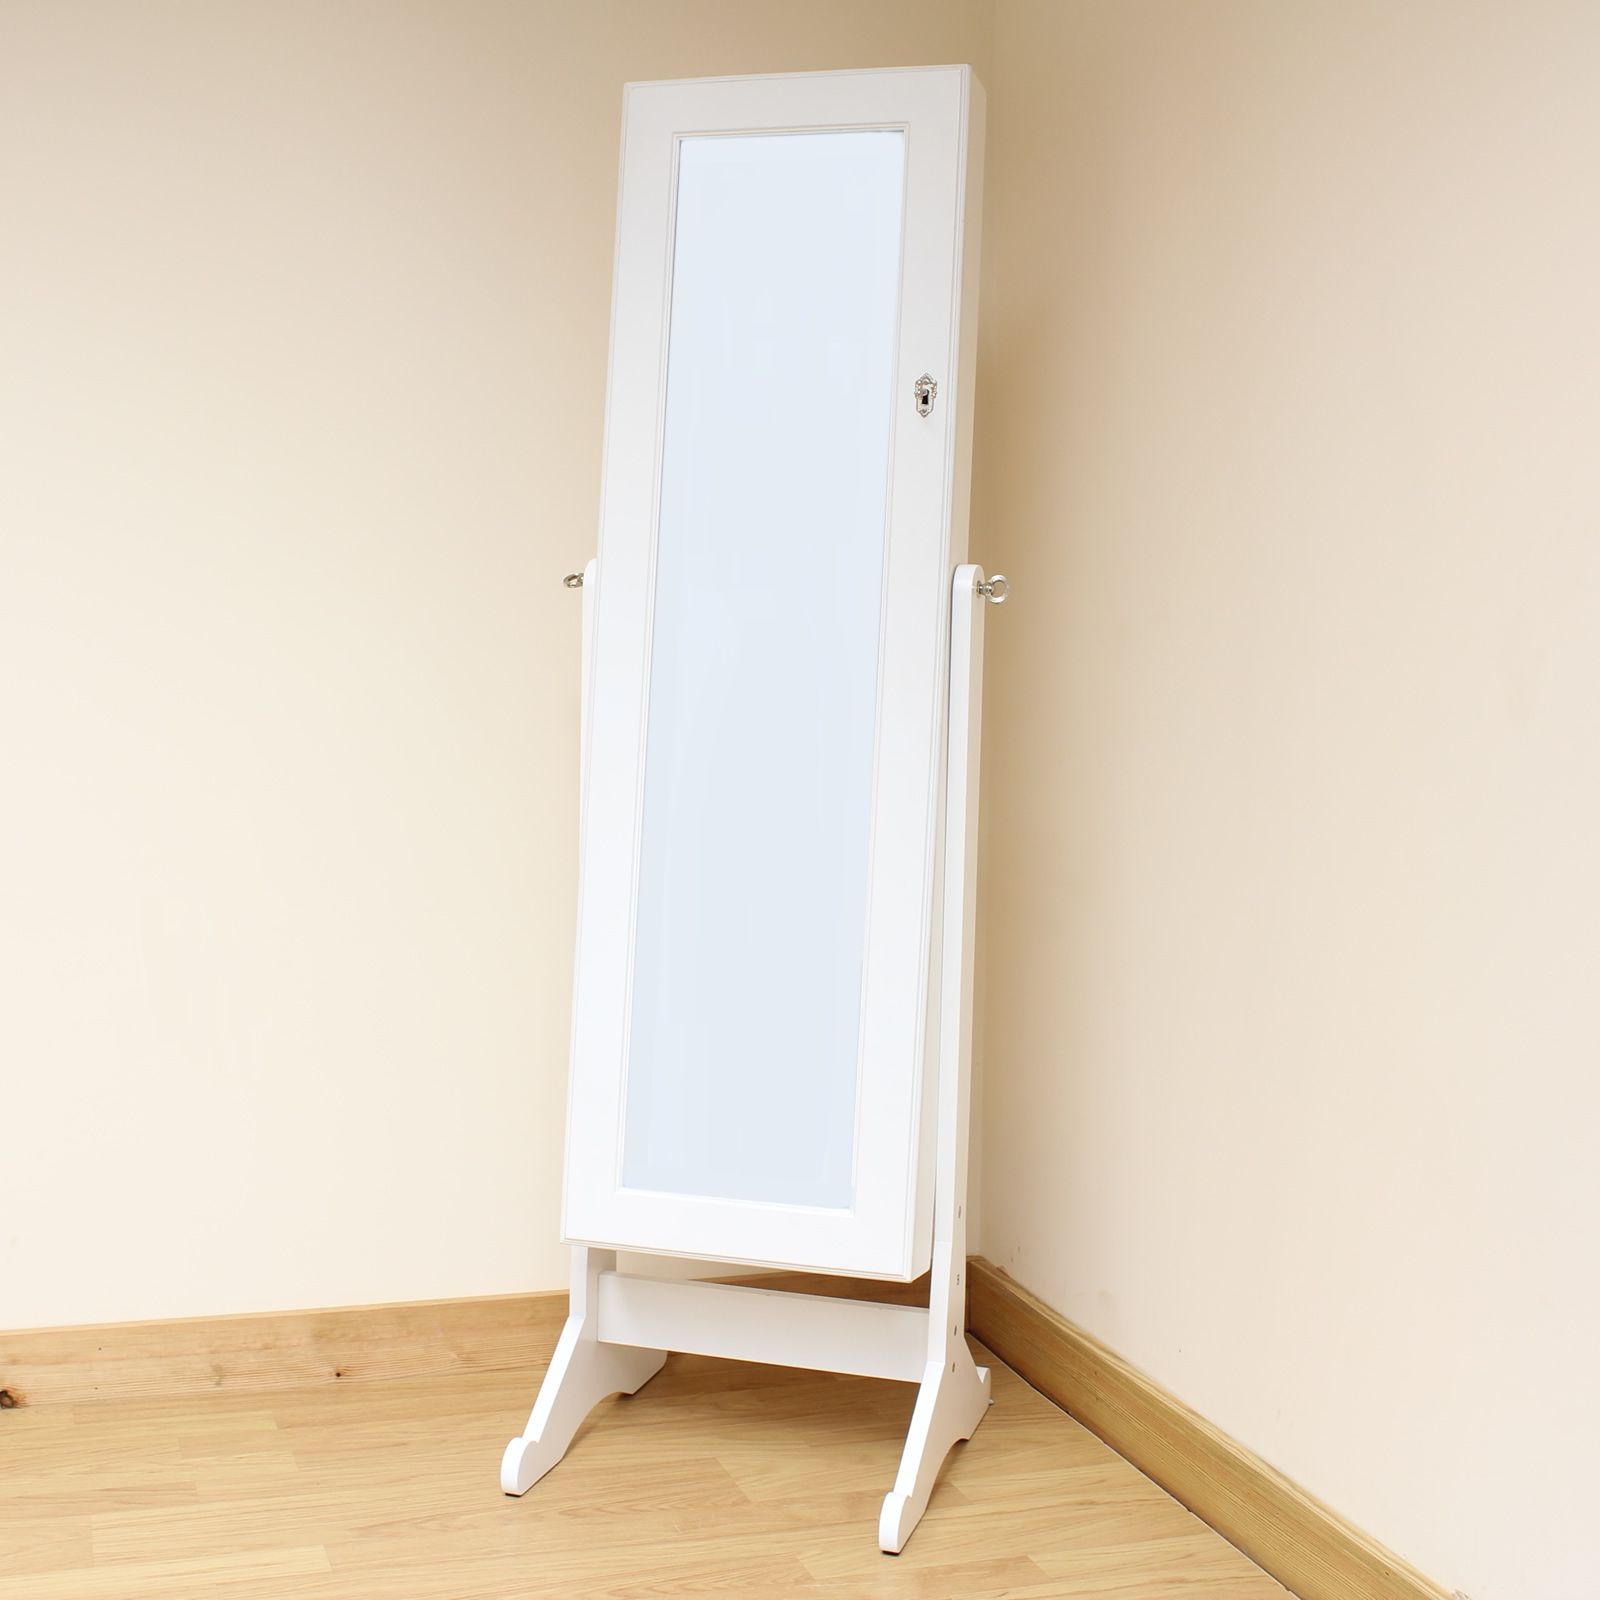 Flooring Imposingloor Standing Mirror Photos Inspirations Jwl Throughout Buy Free Standing Mirror (View 6 of 15)